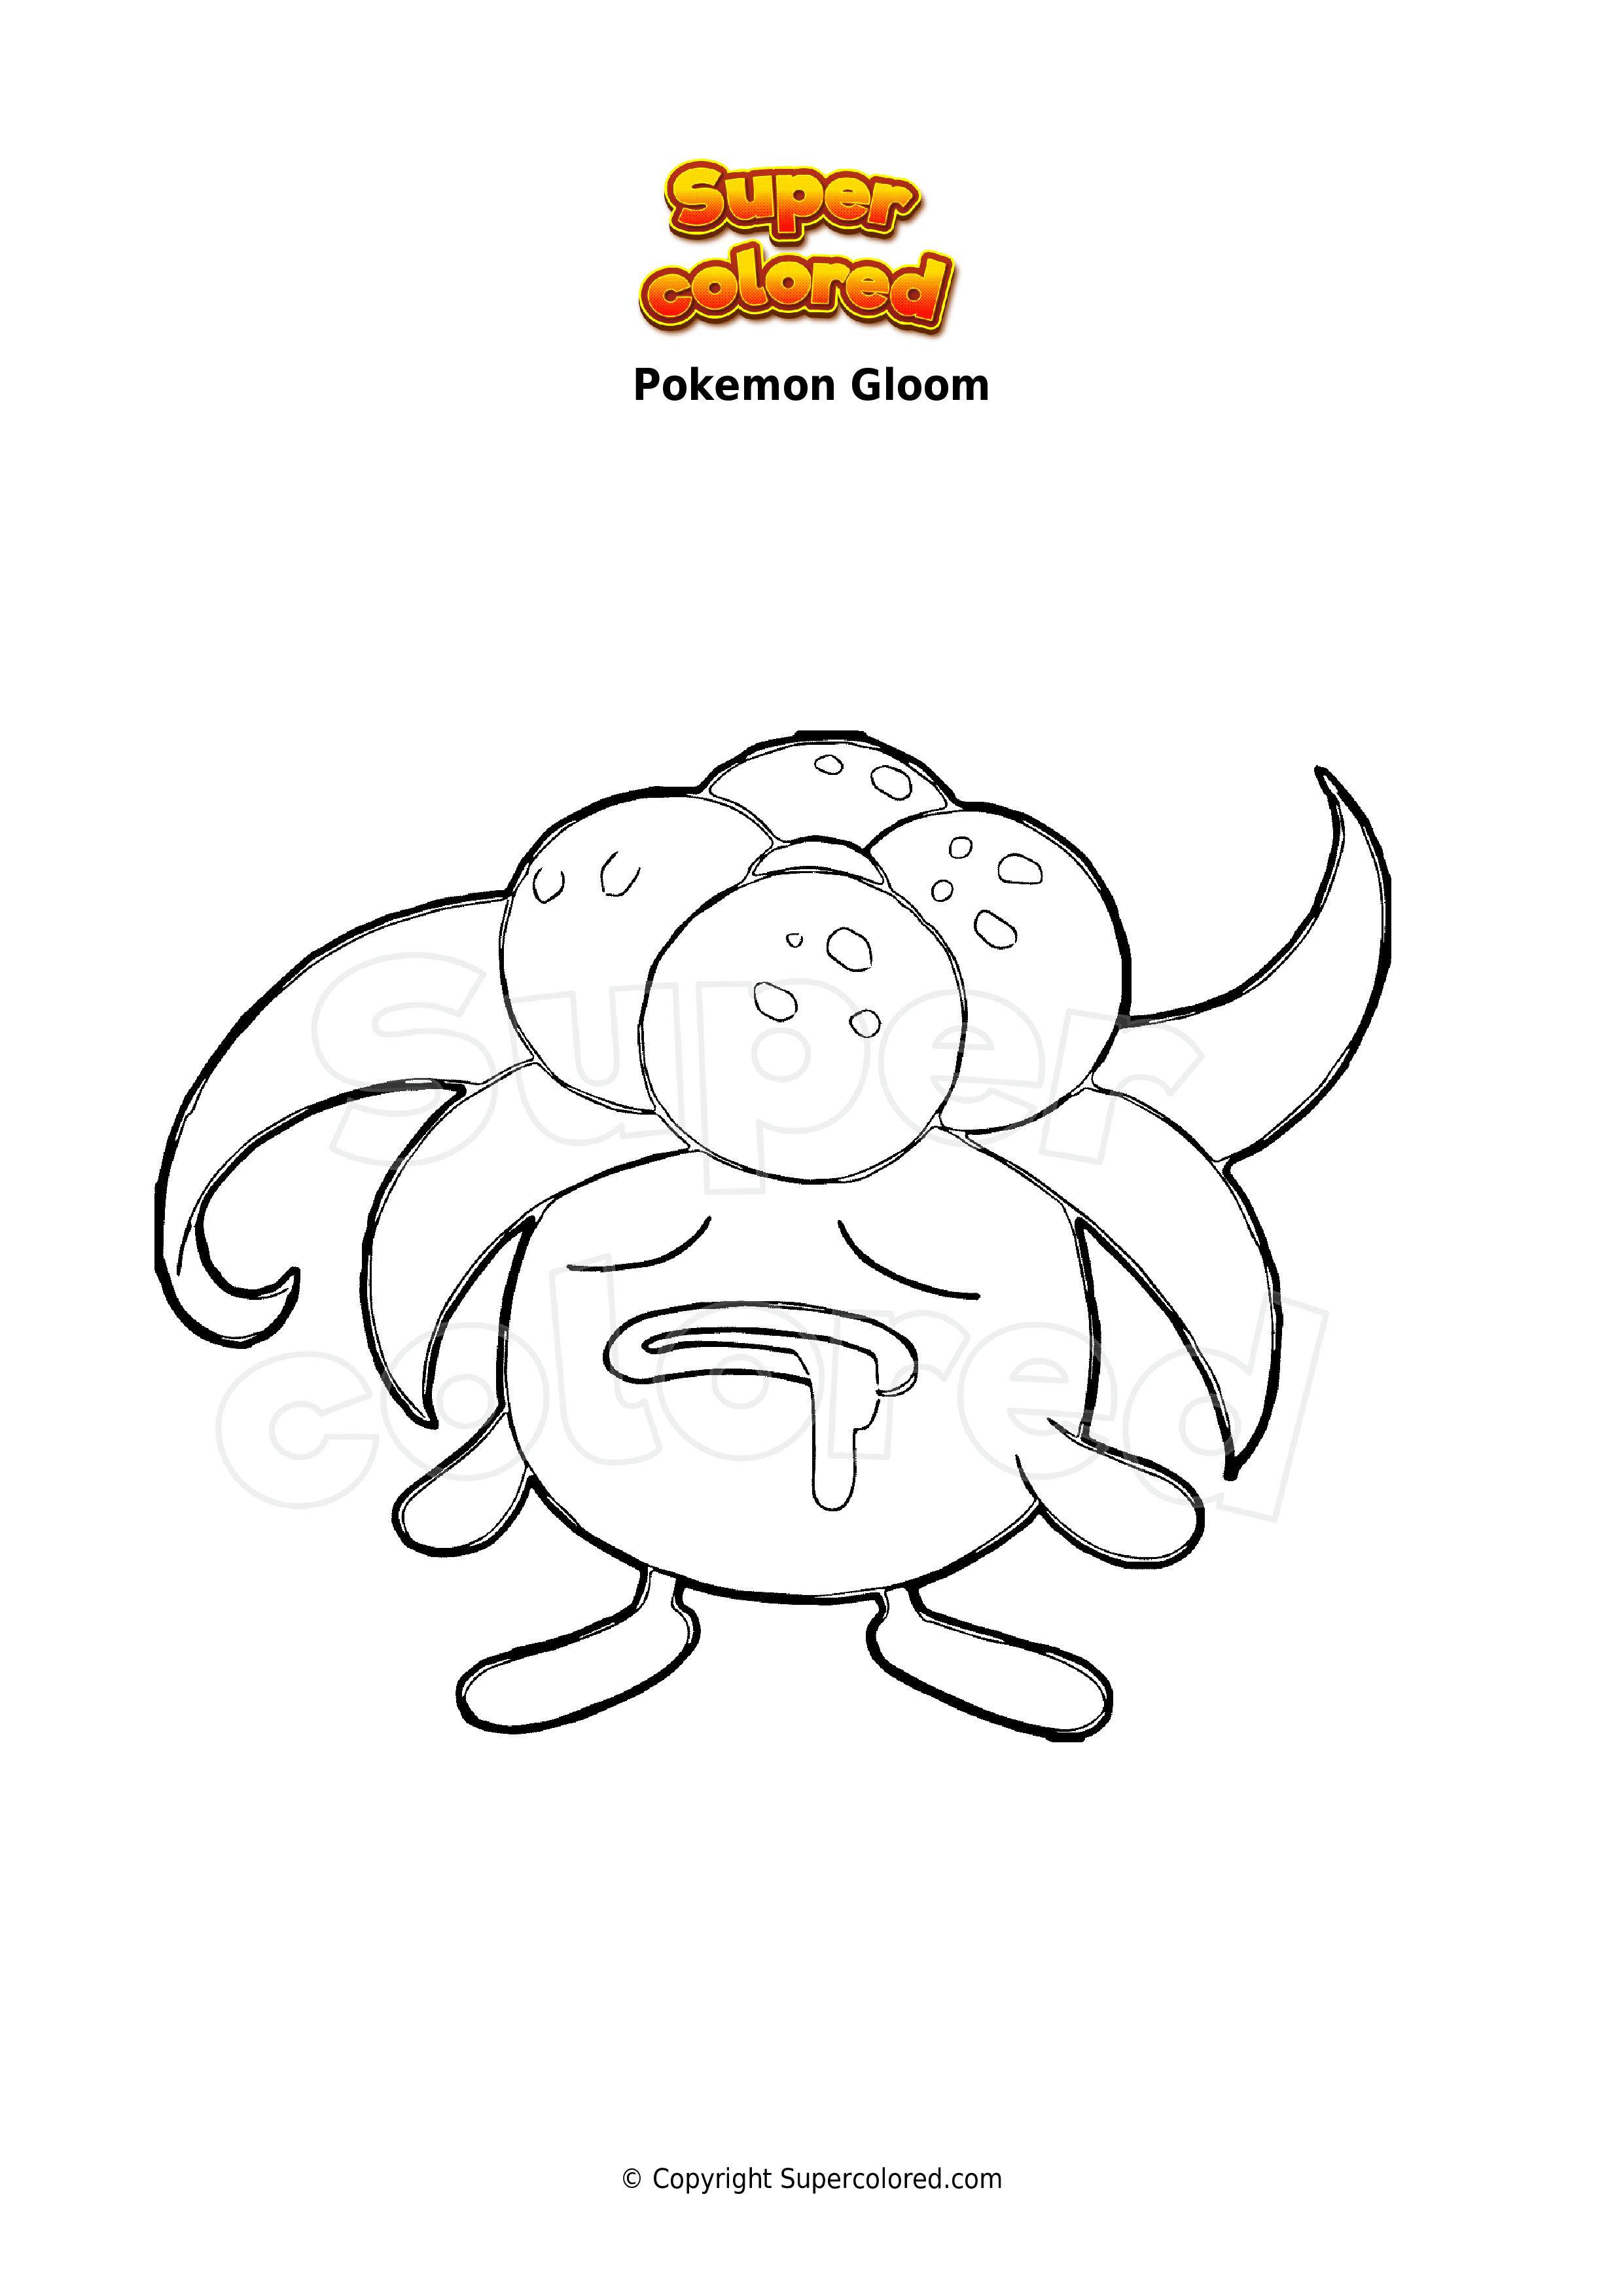 Coloring page Pokemon Gloom - Supercolored.com